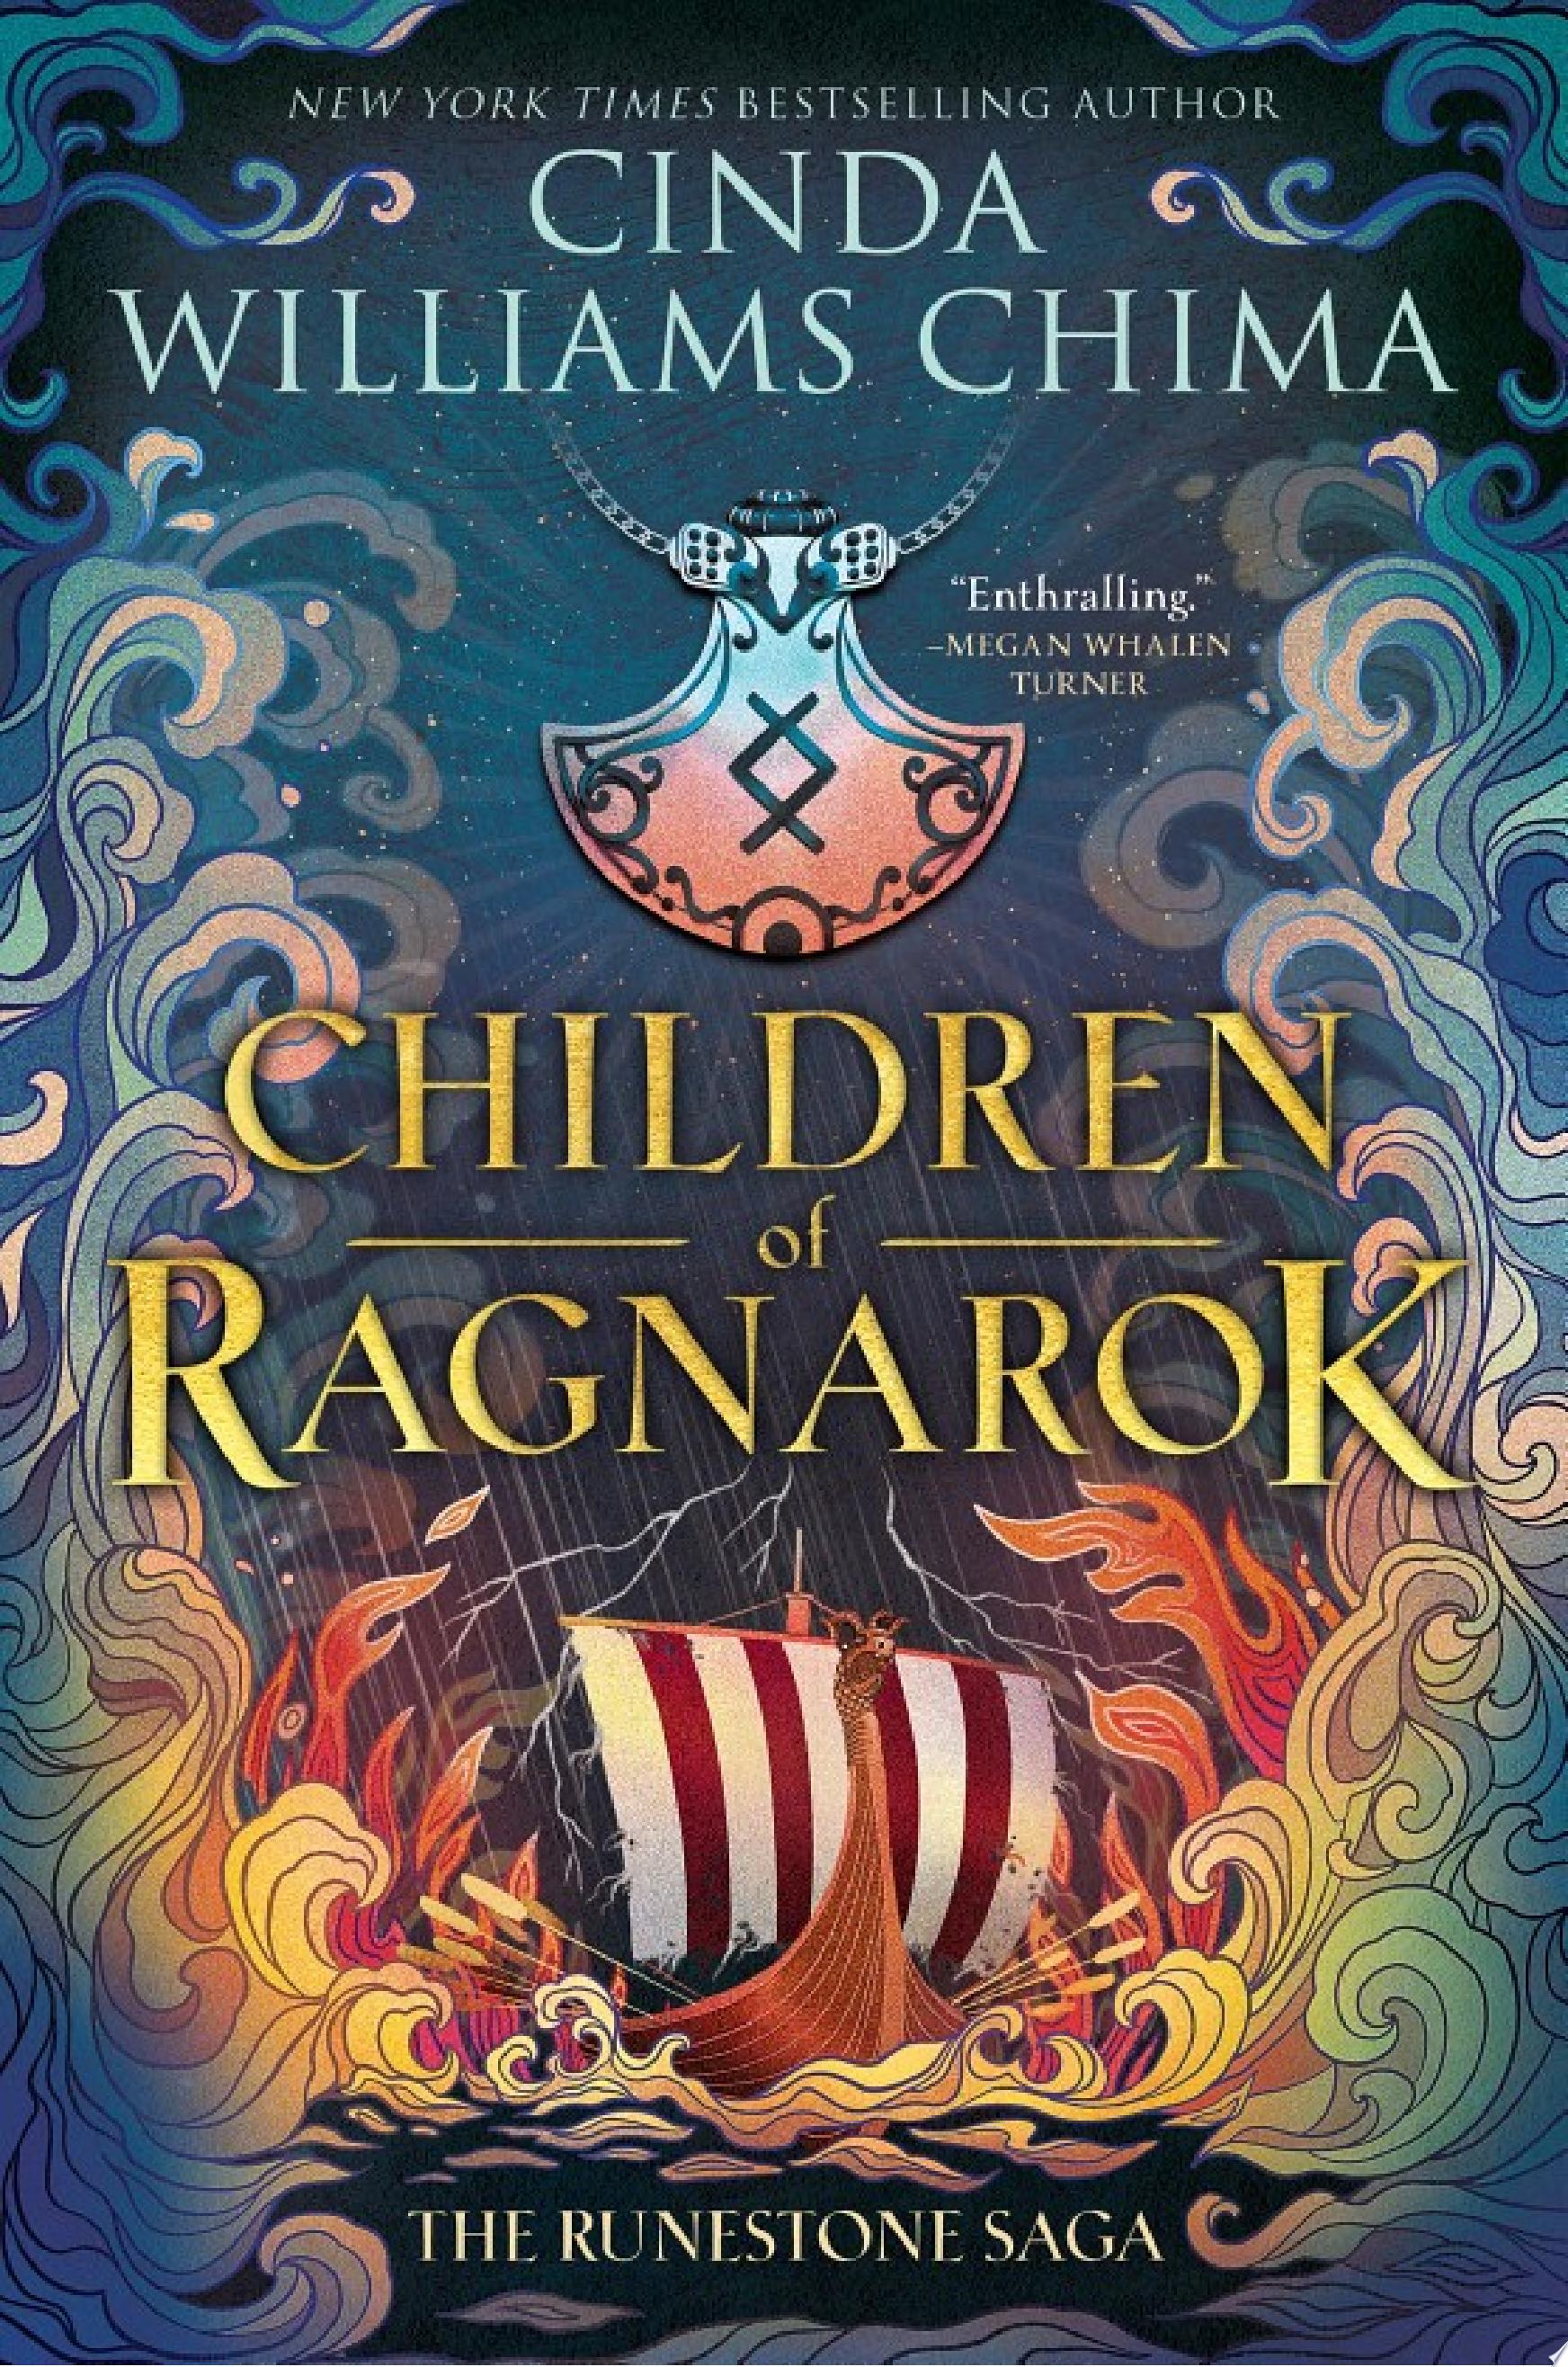 Image for "Runestone Saga: Children of Ragnarok"